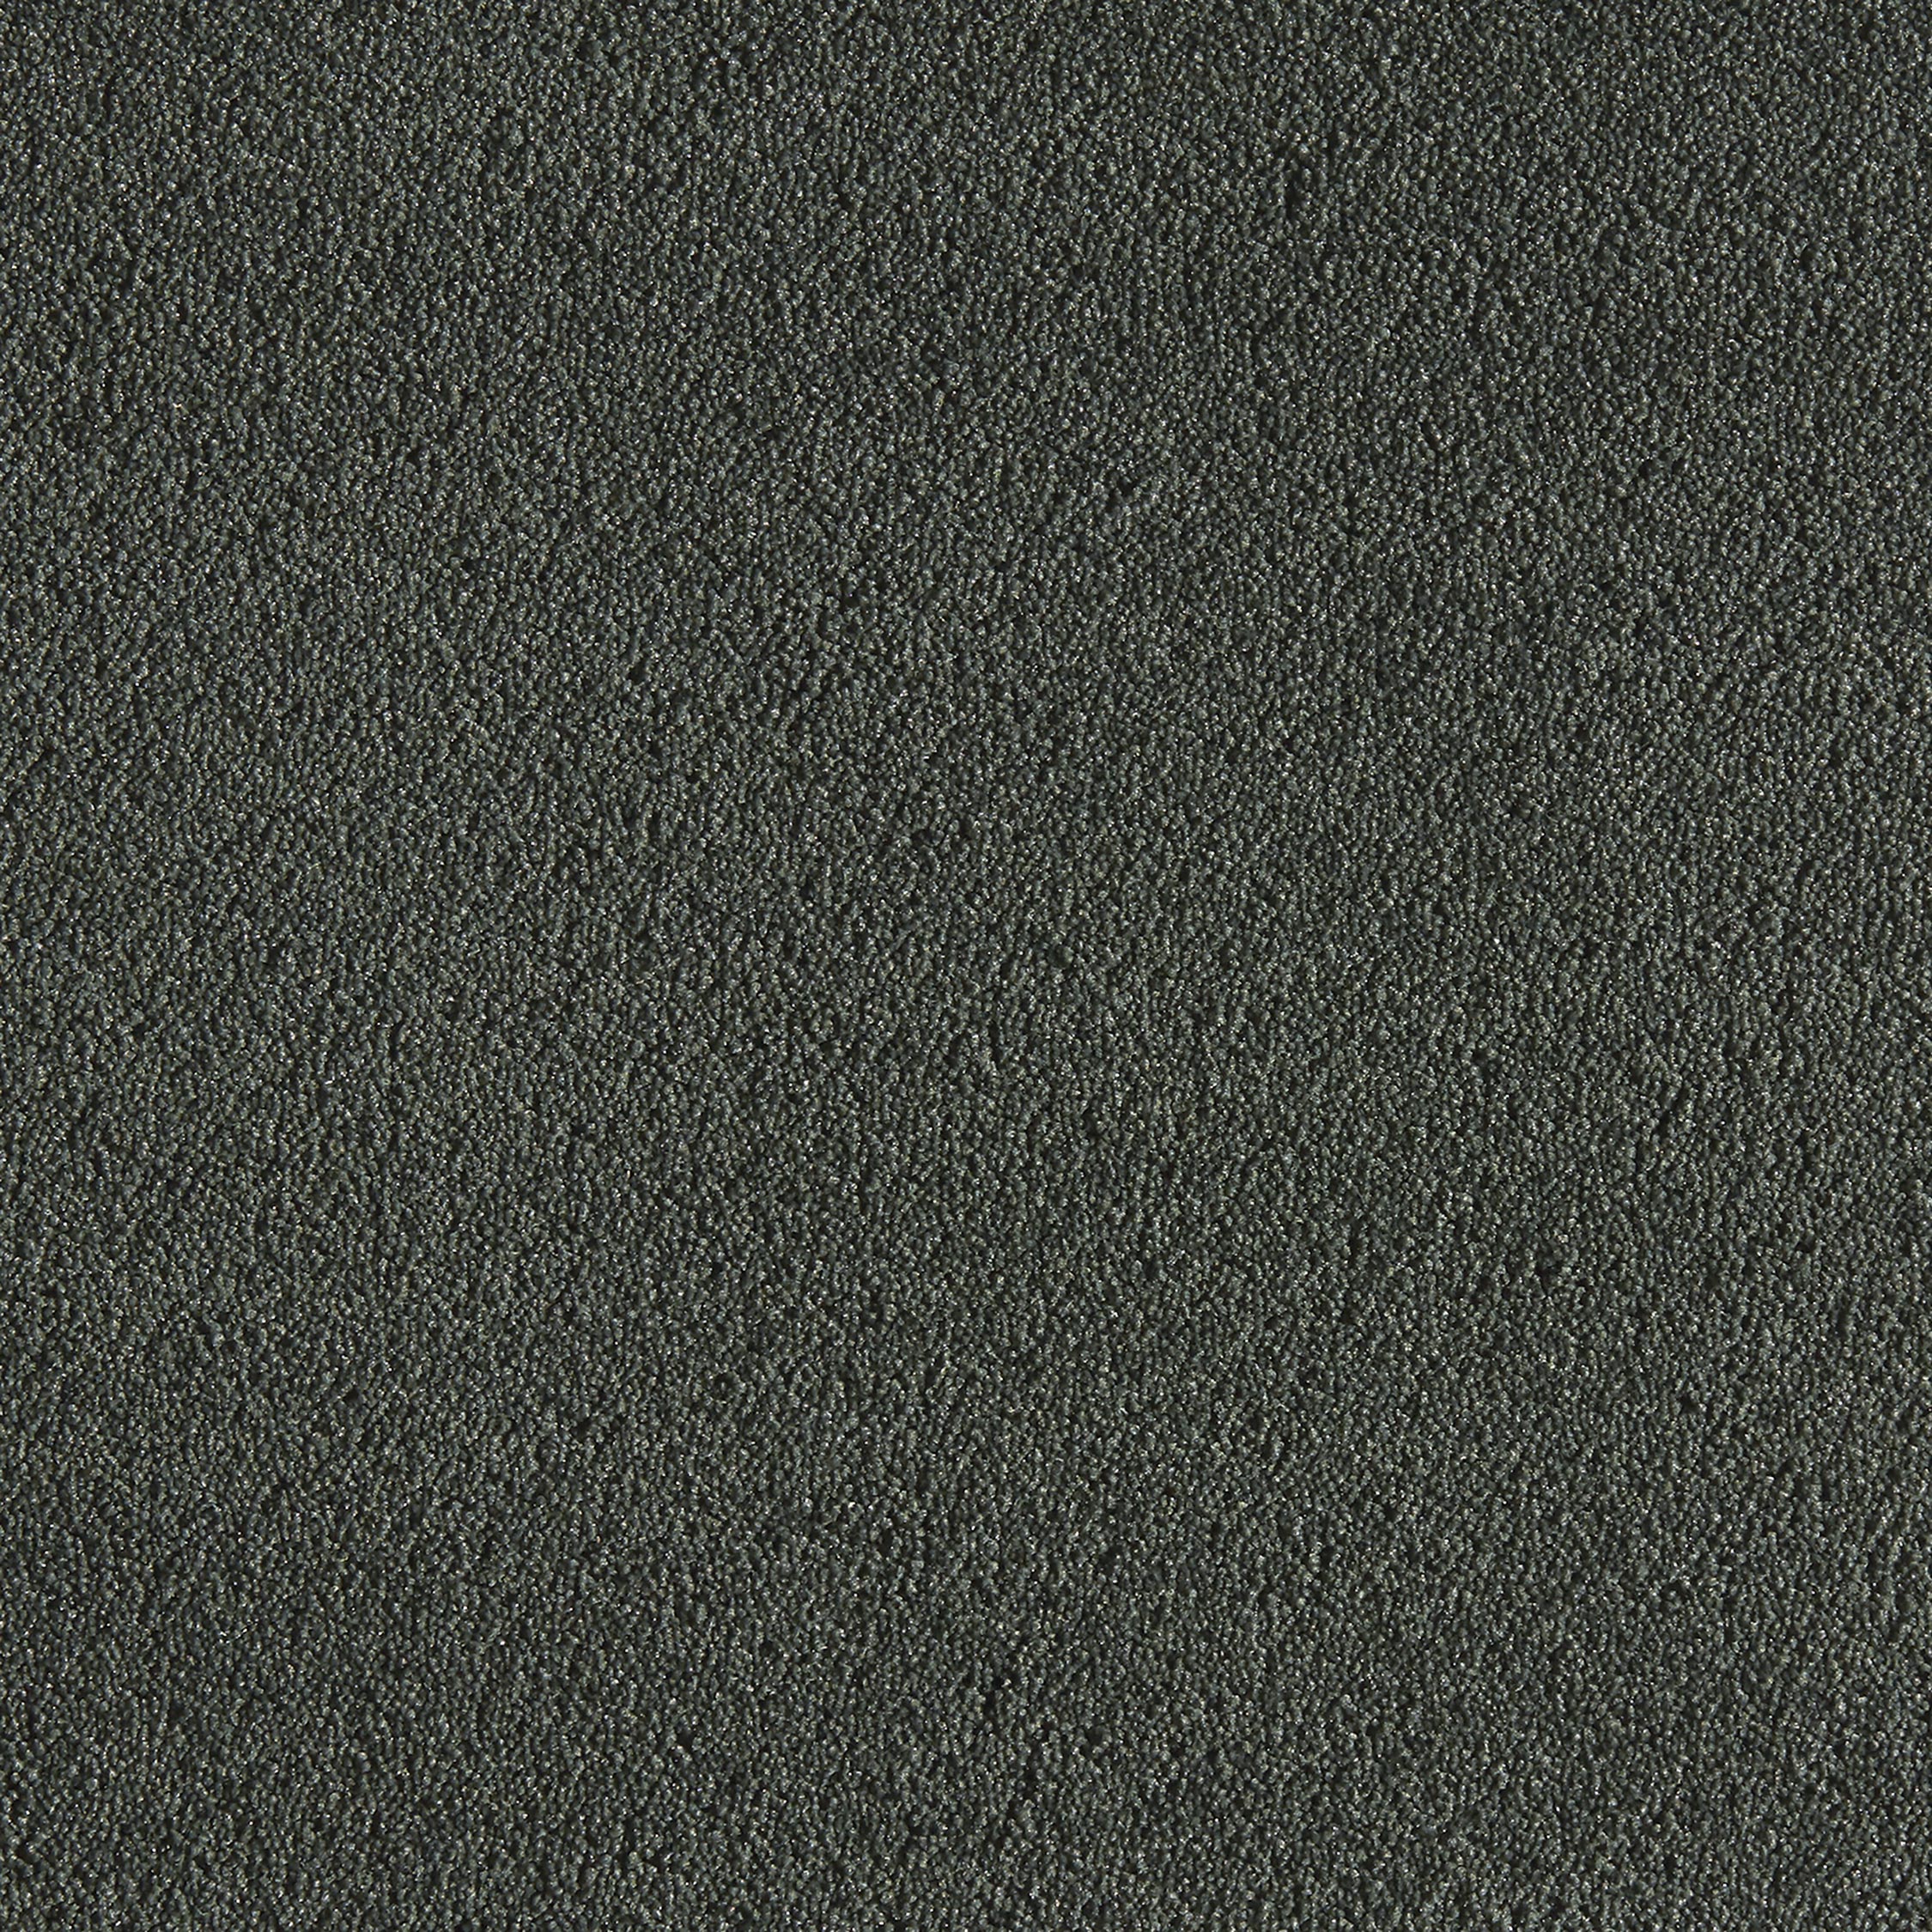 Texture 2000 dusty green